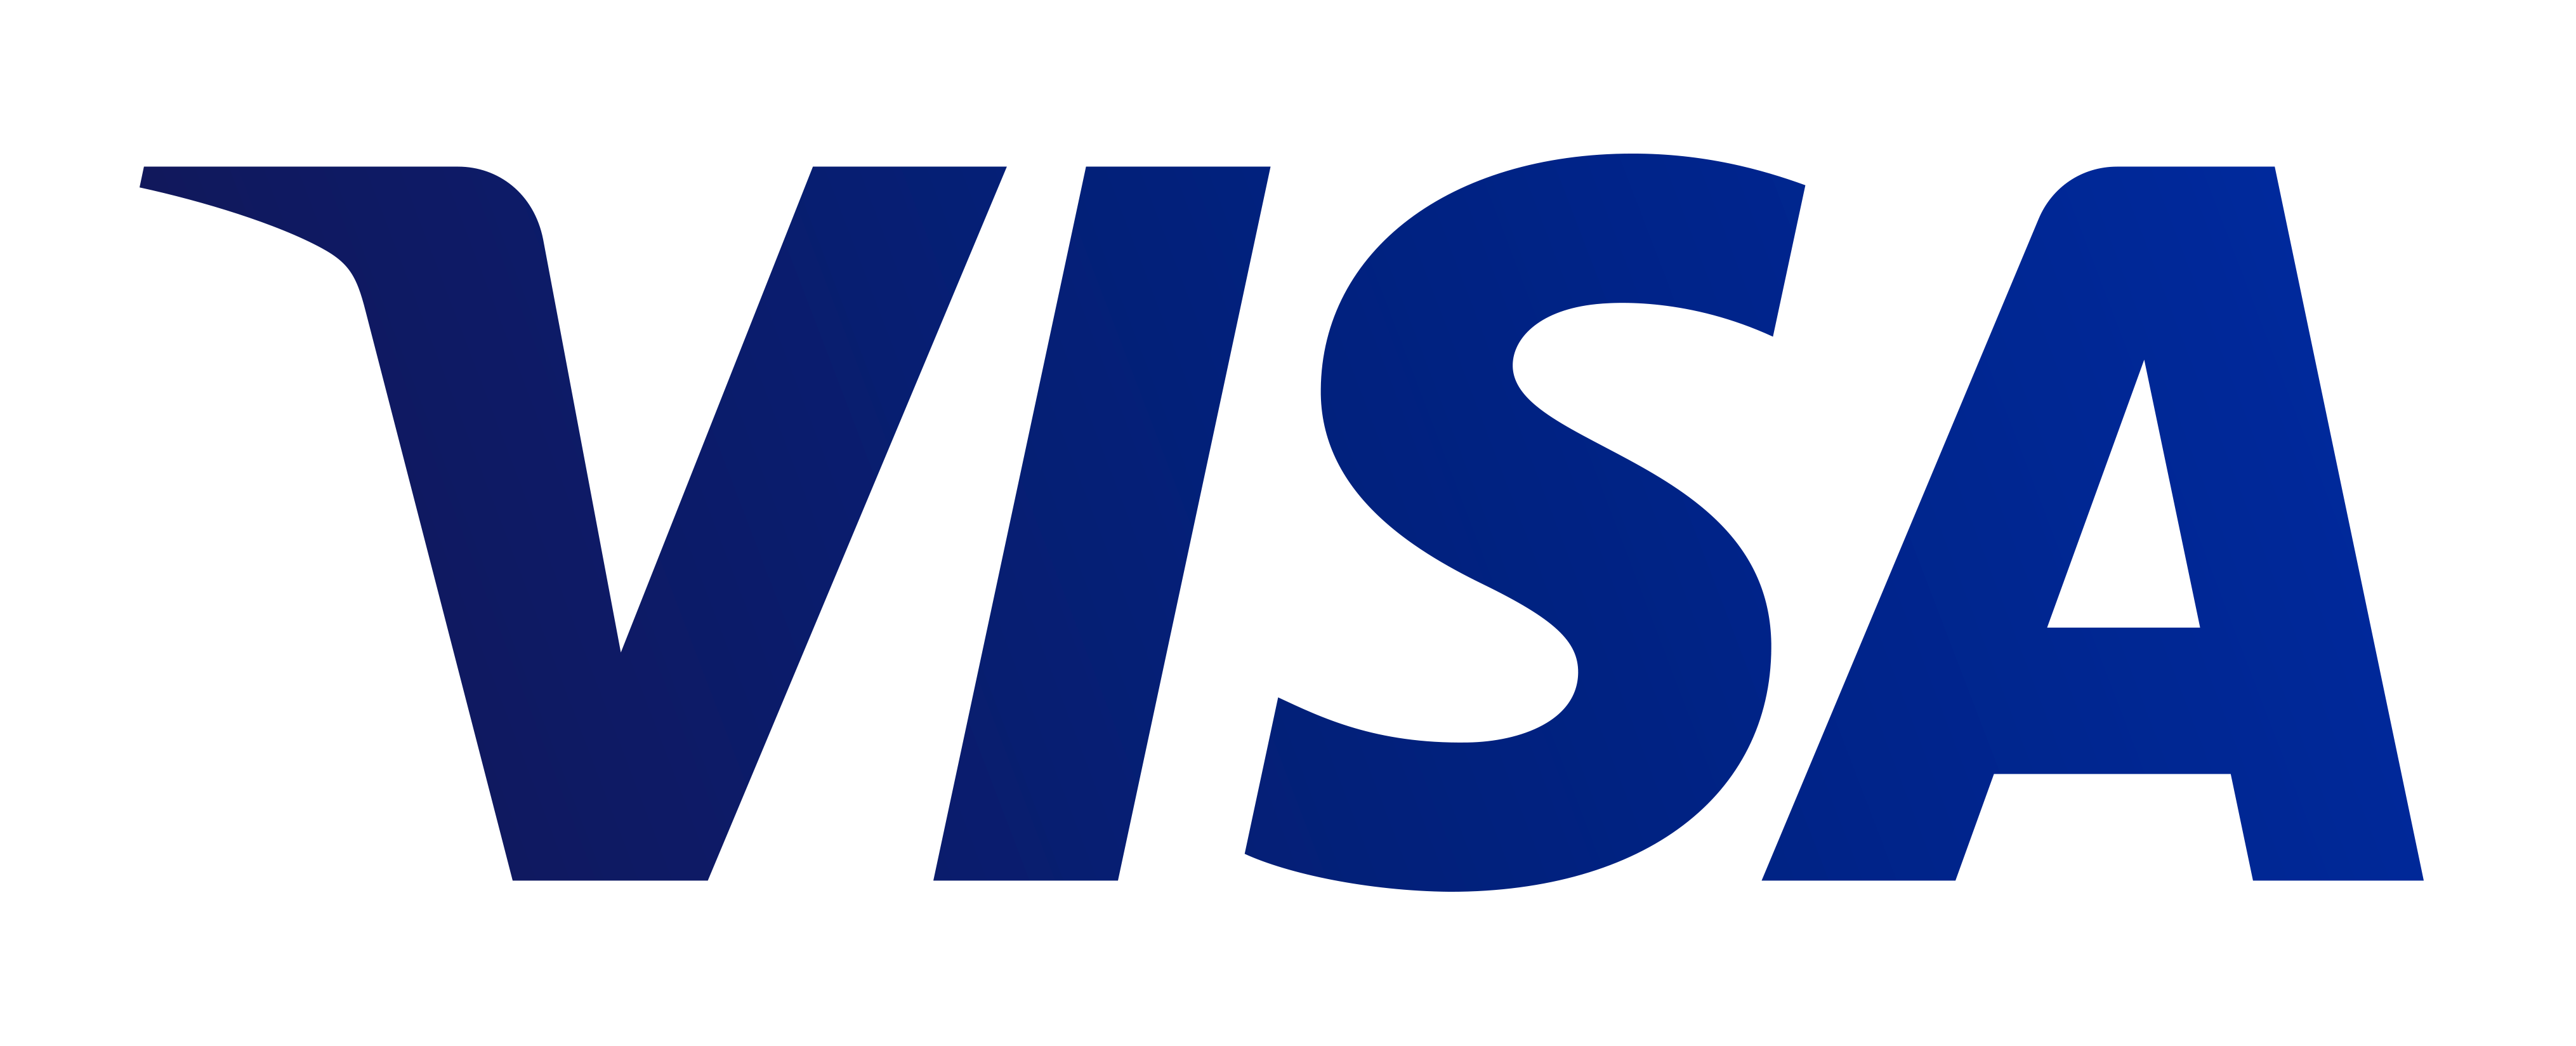  Visa Logo PNG Image PurePNG Free Transparent CC0 PNG Image Library